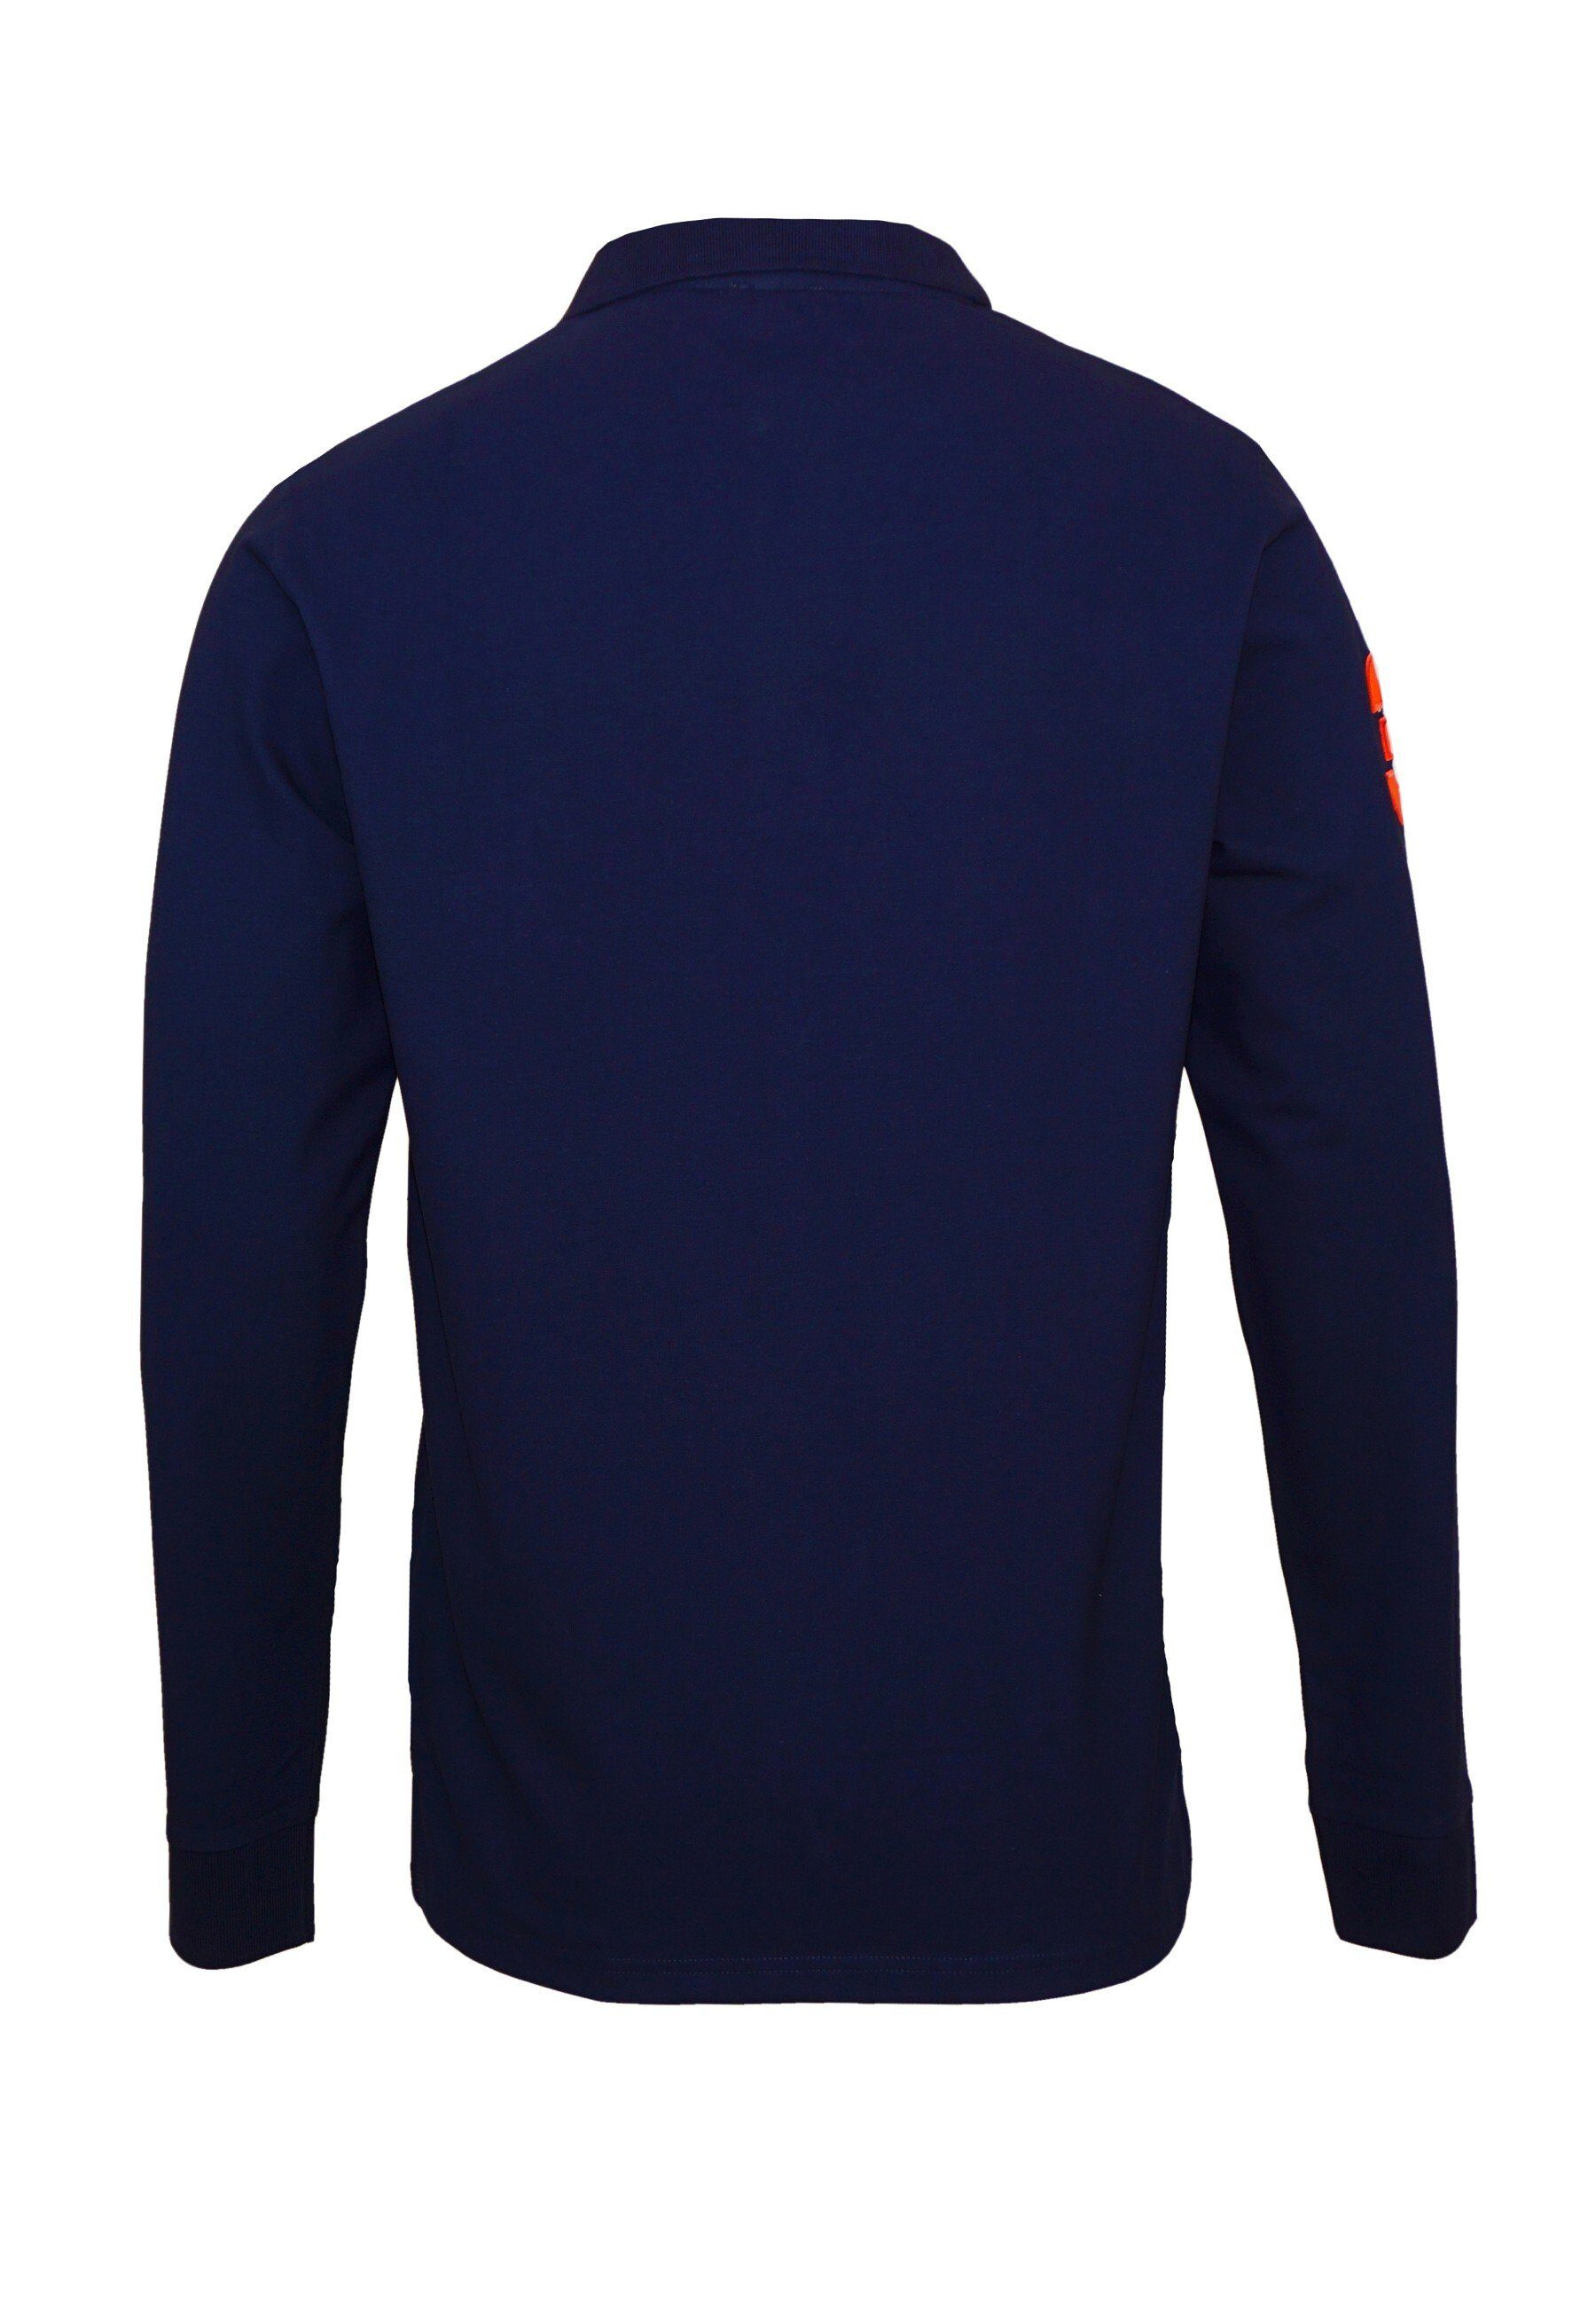 U.S. Polo Assn Poloshirt Shirt Langarm Poloshirt dunkelblau